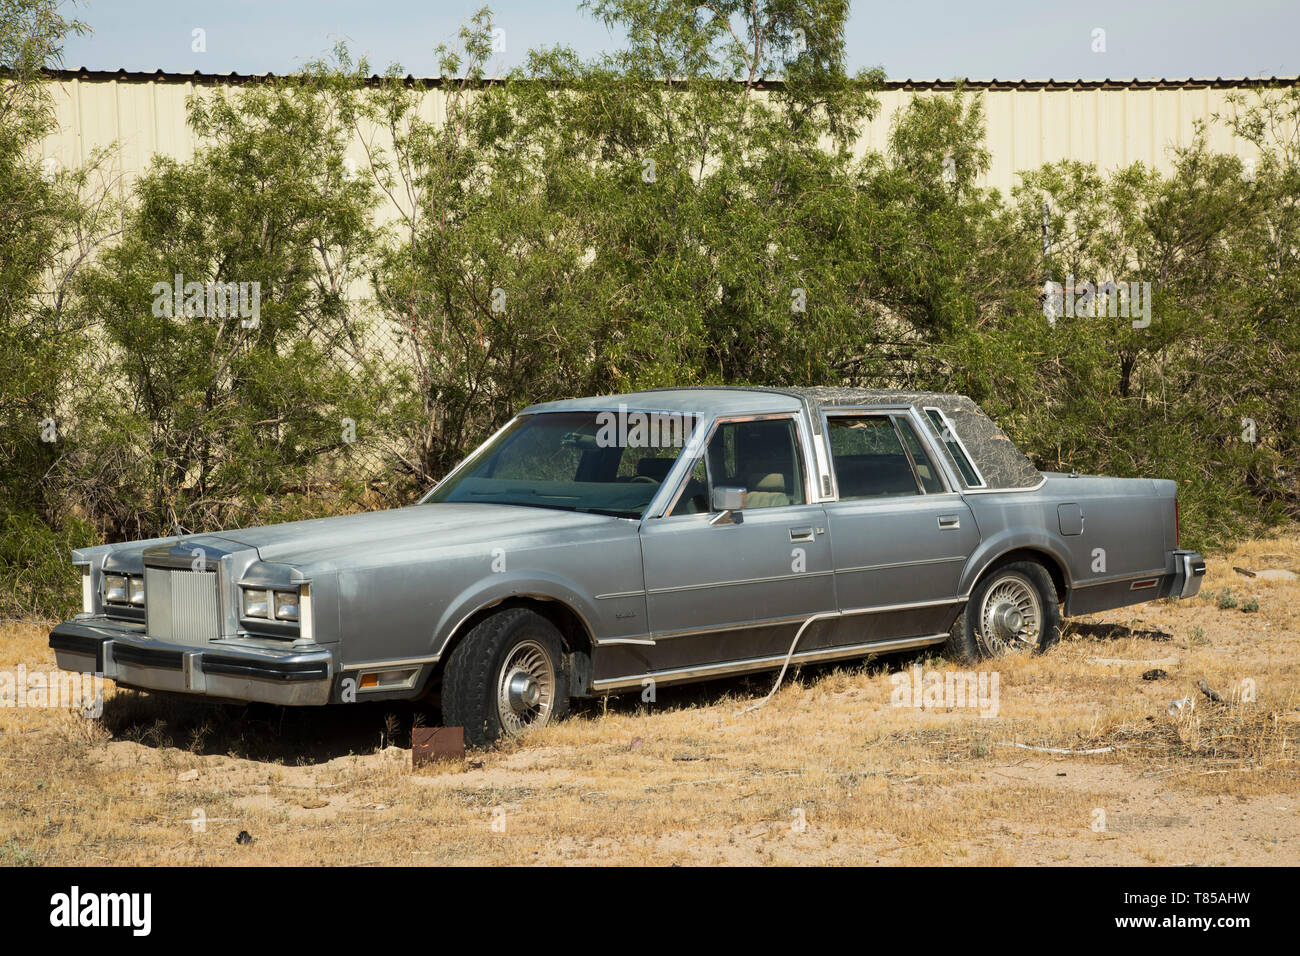 Old Lincoln car, Yermo, California, United States of America Stock Photo